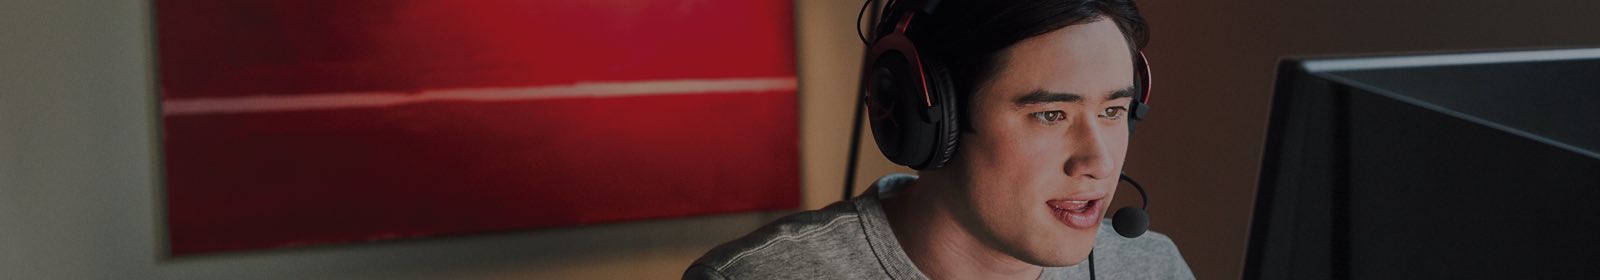 Man wearing headphones using a computer